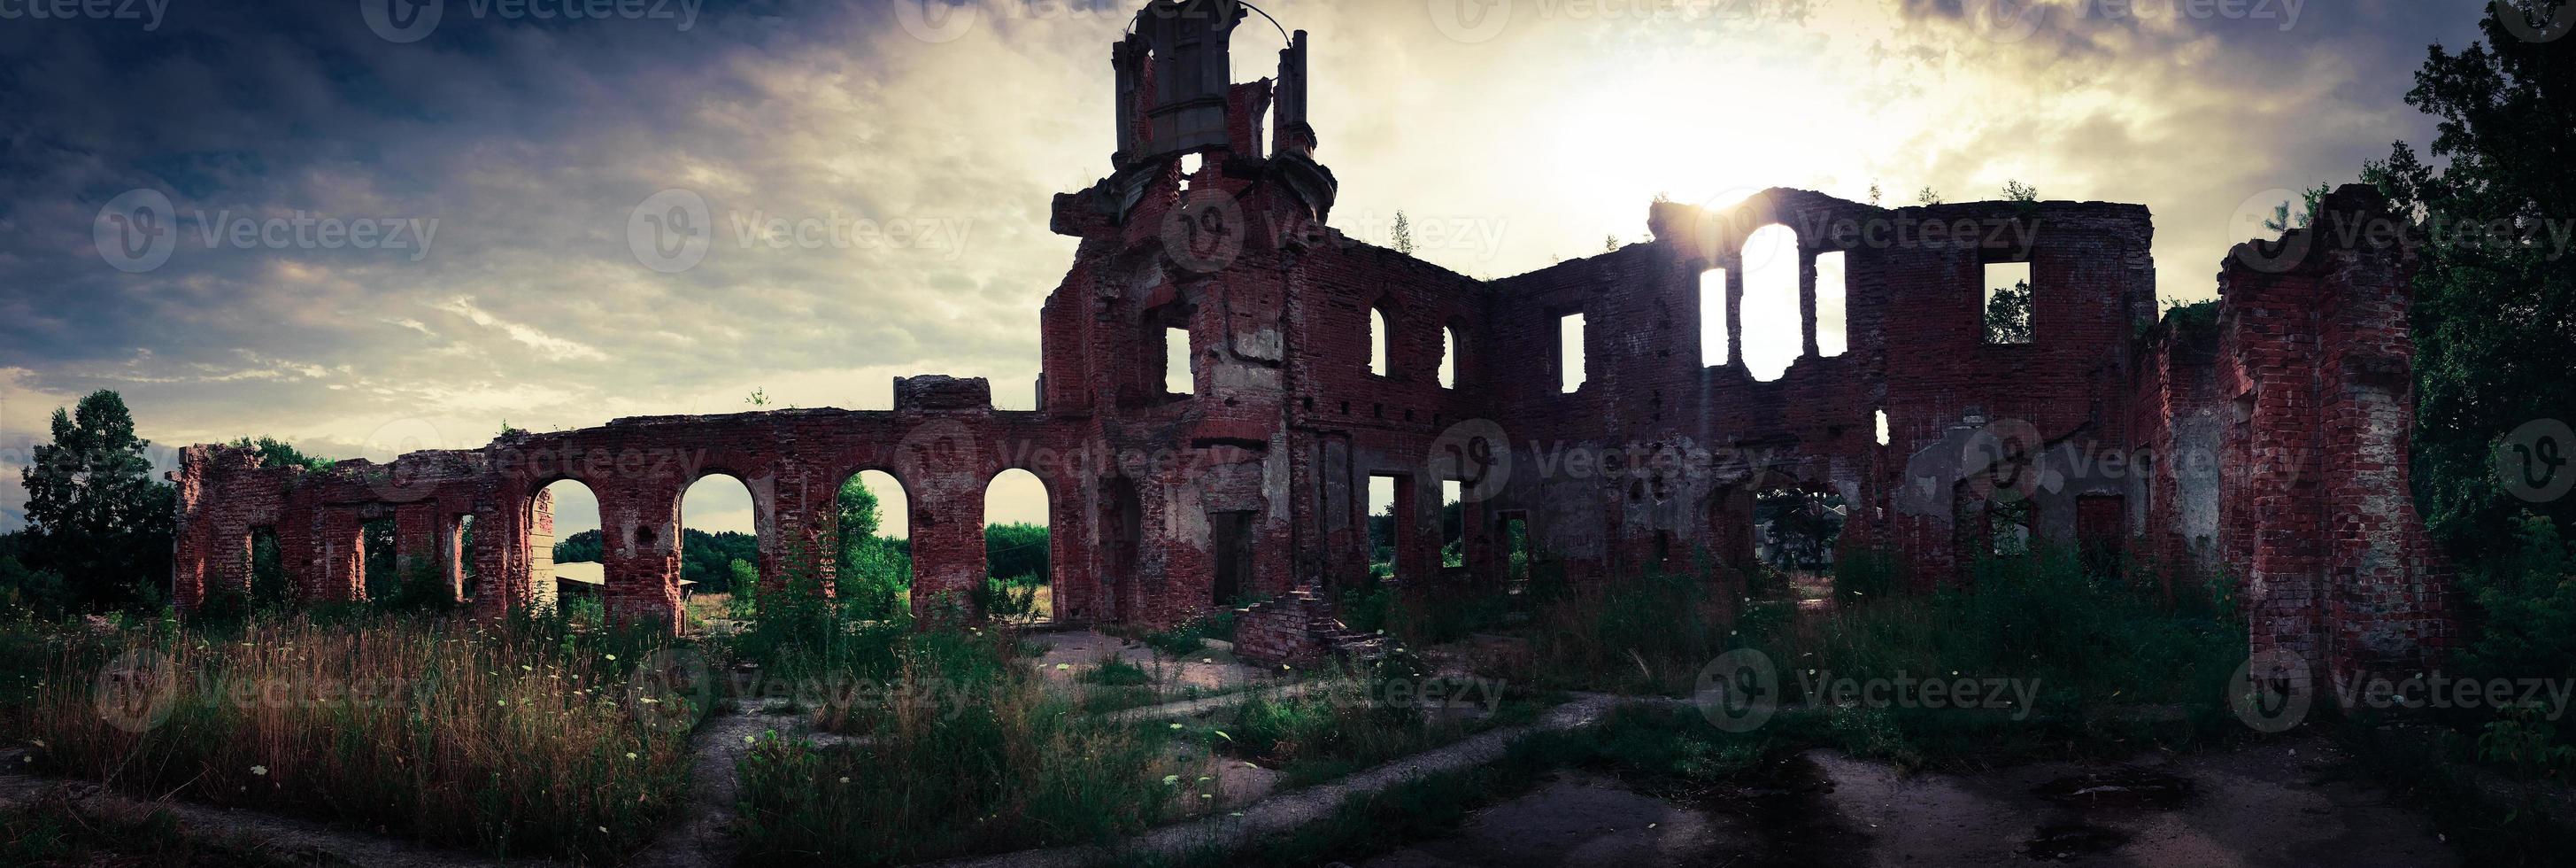 ruinerat torn i godset Tereshchenko foto